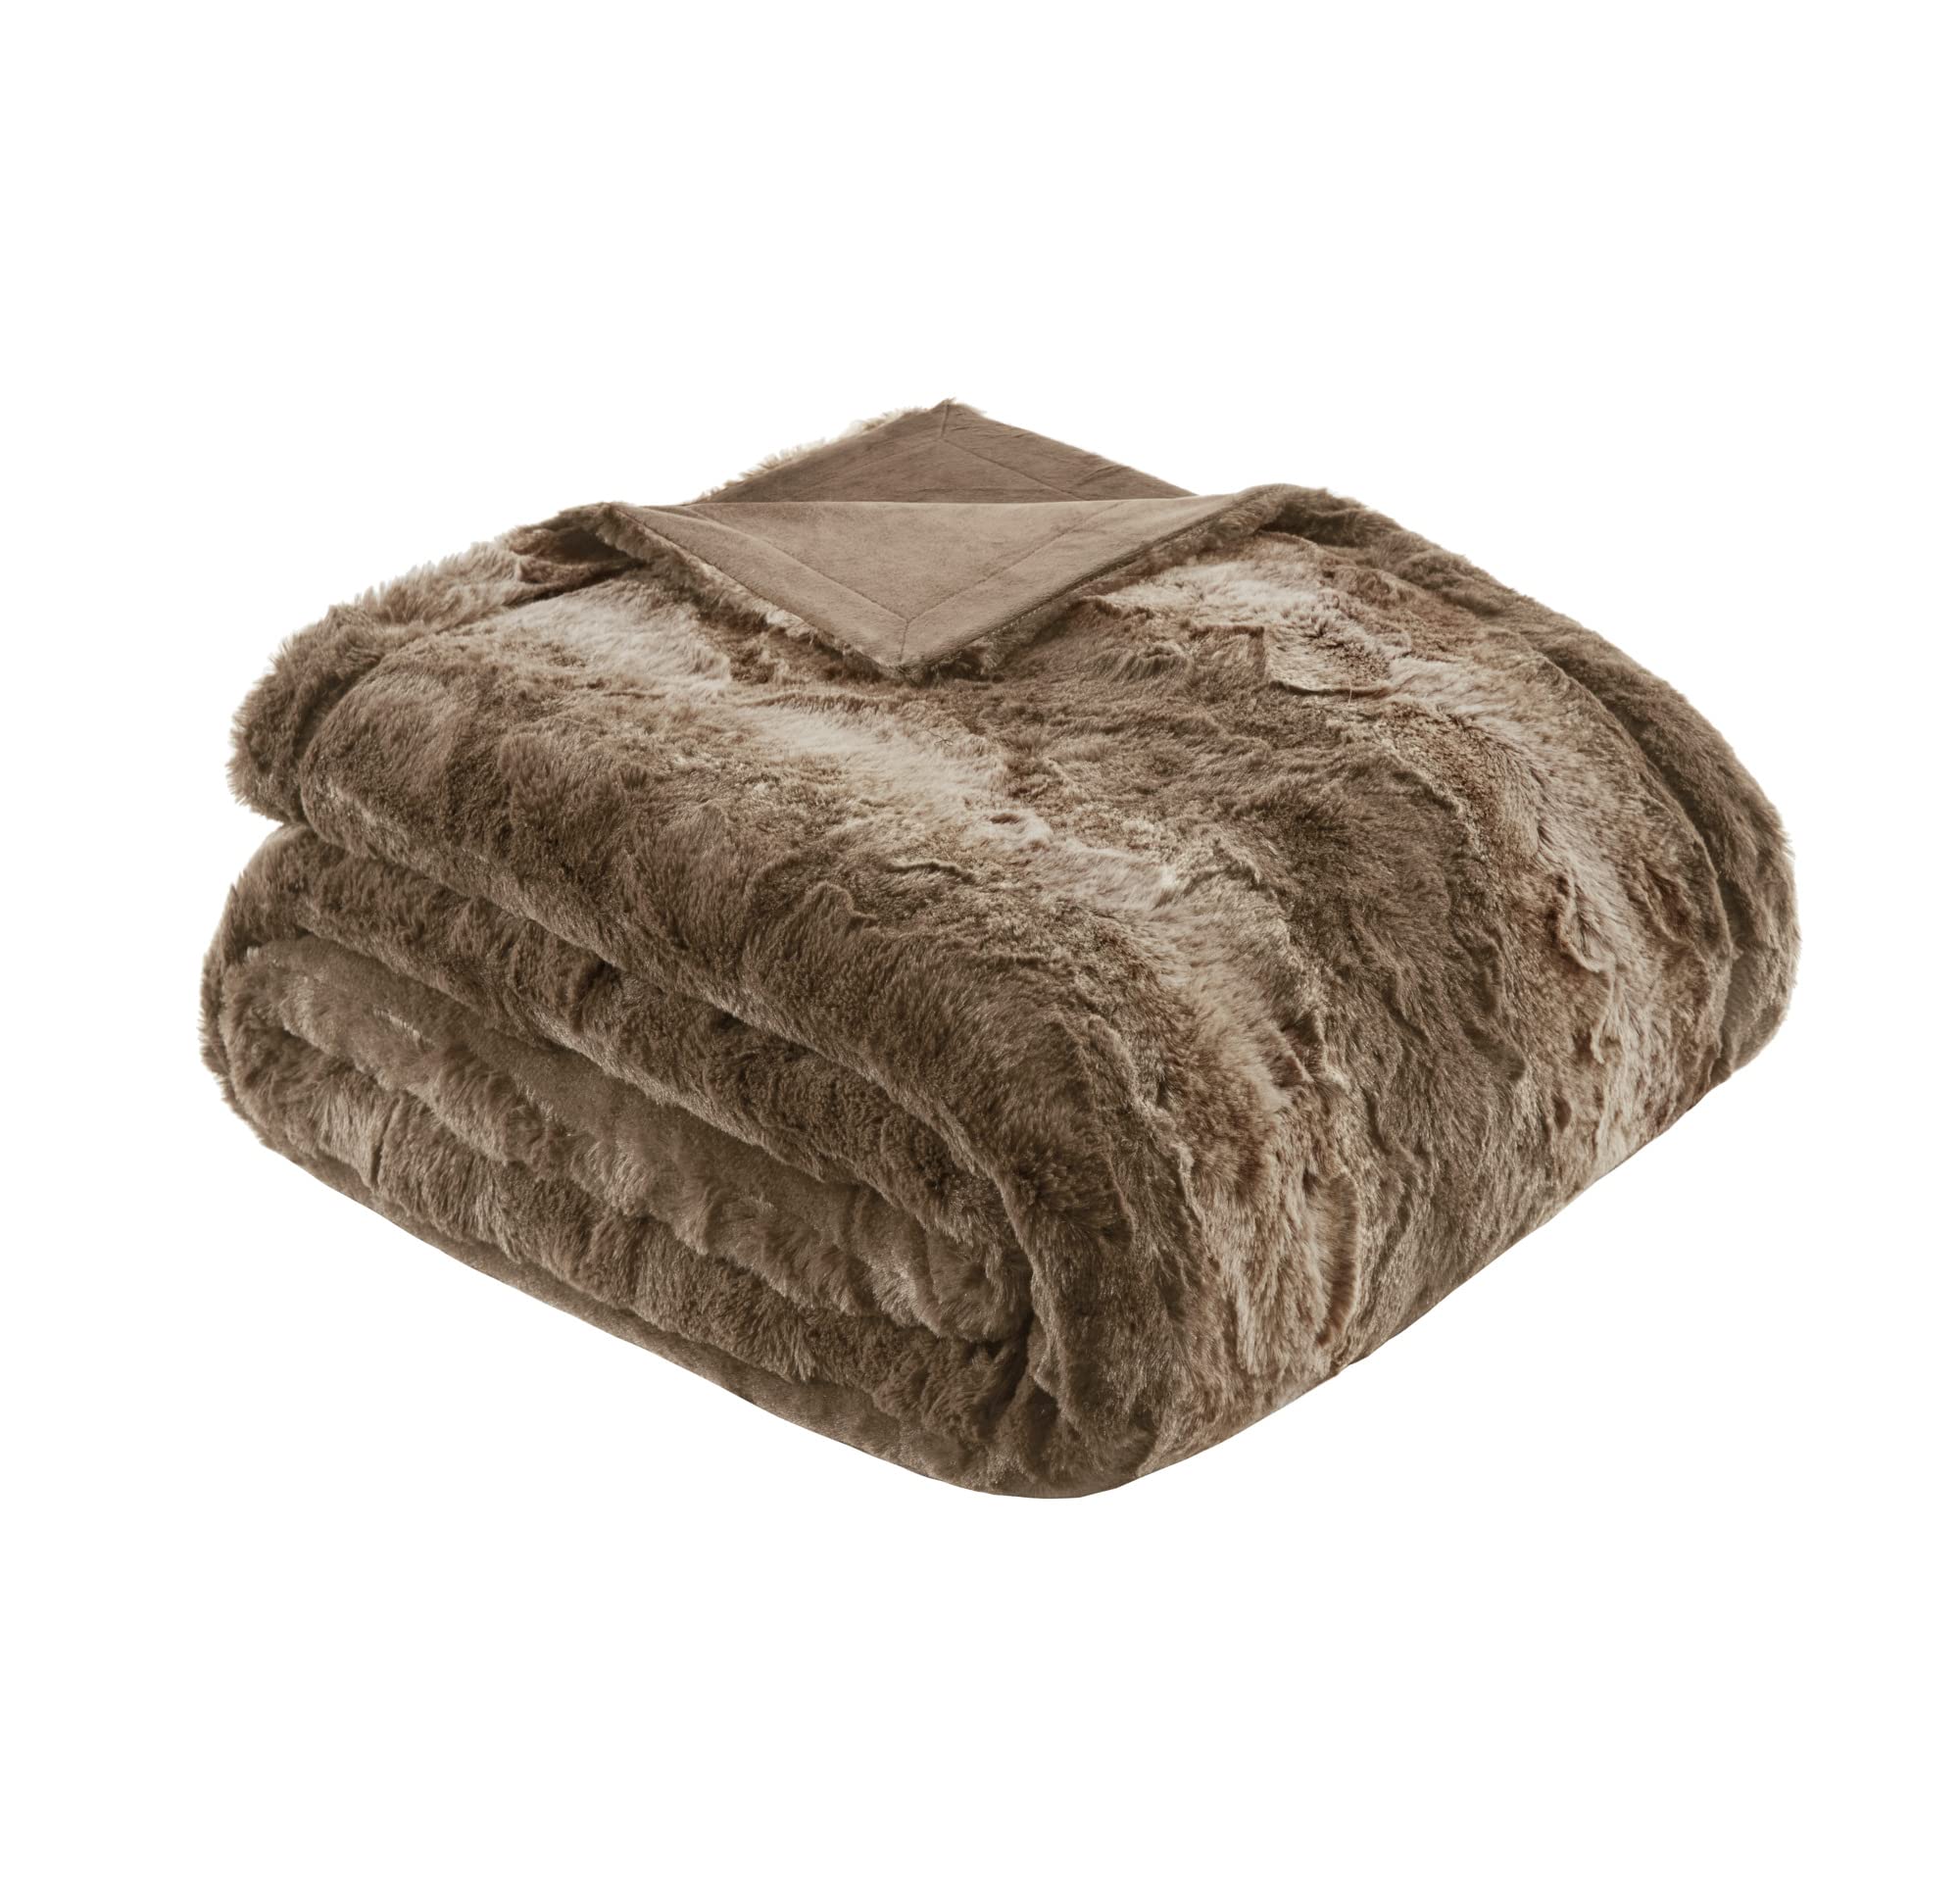 Madison Park Luxury Oversized Faux Fur Throw Soft Plush Luxury Stripes Design 60x70" Blanket, Tan - image 4 of 6